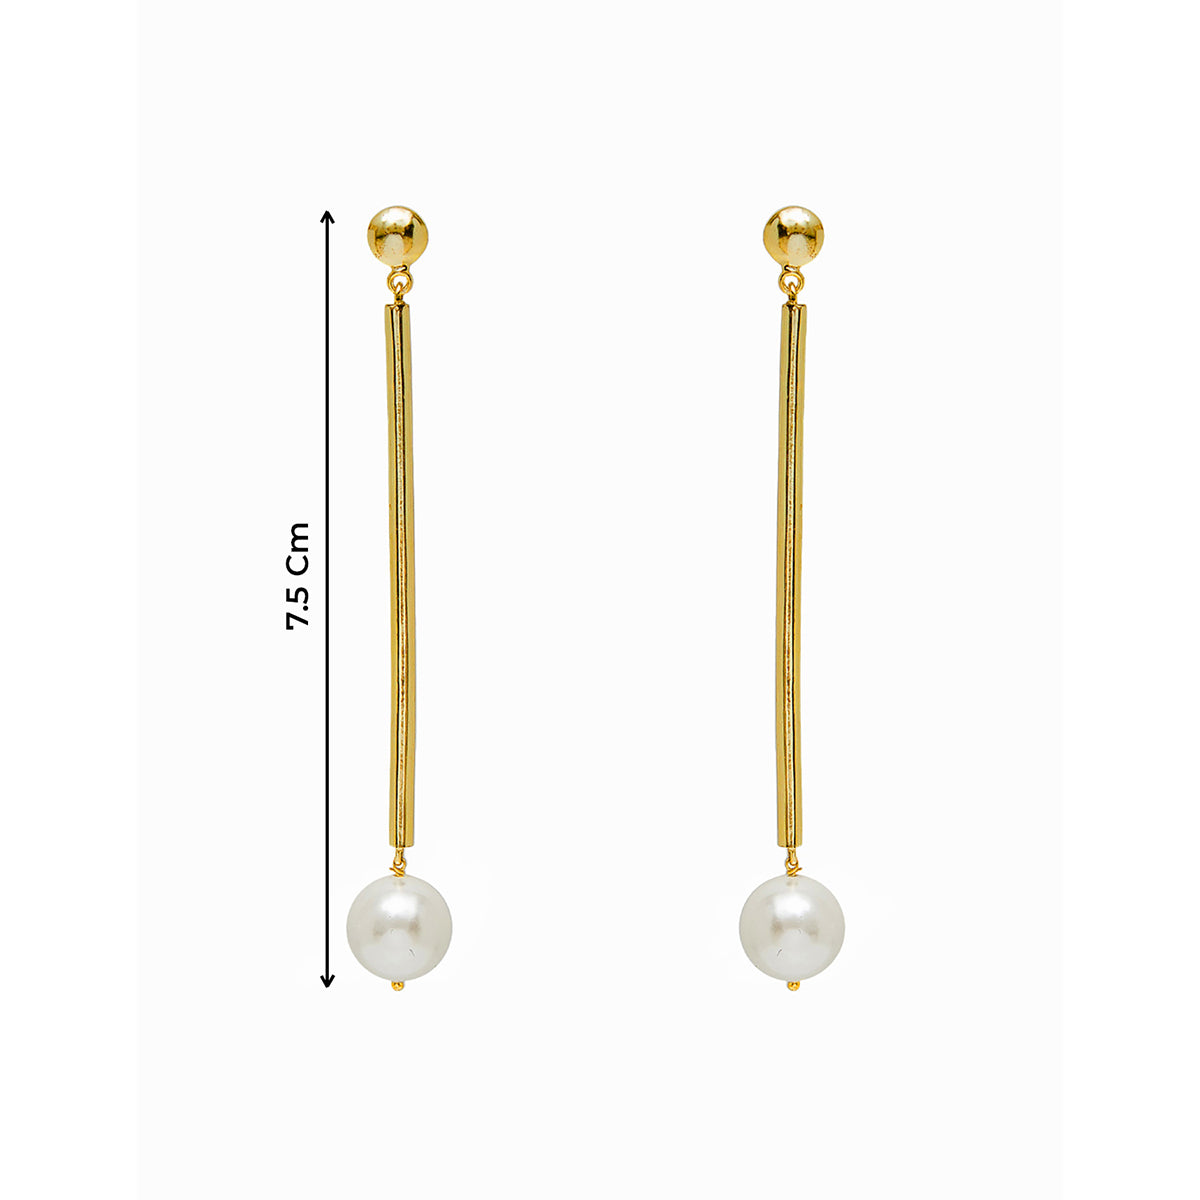 Festive Gold & Ivory Long Dangler Earrings with Pearls